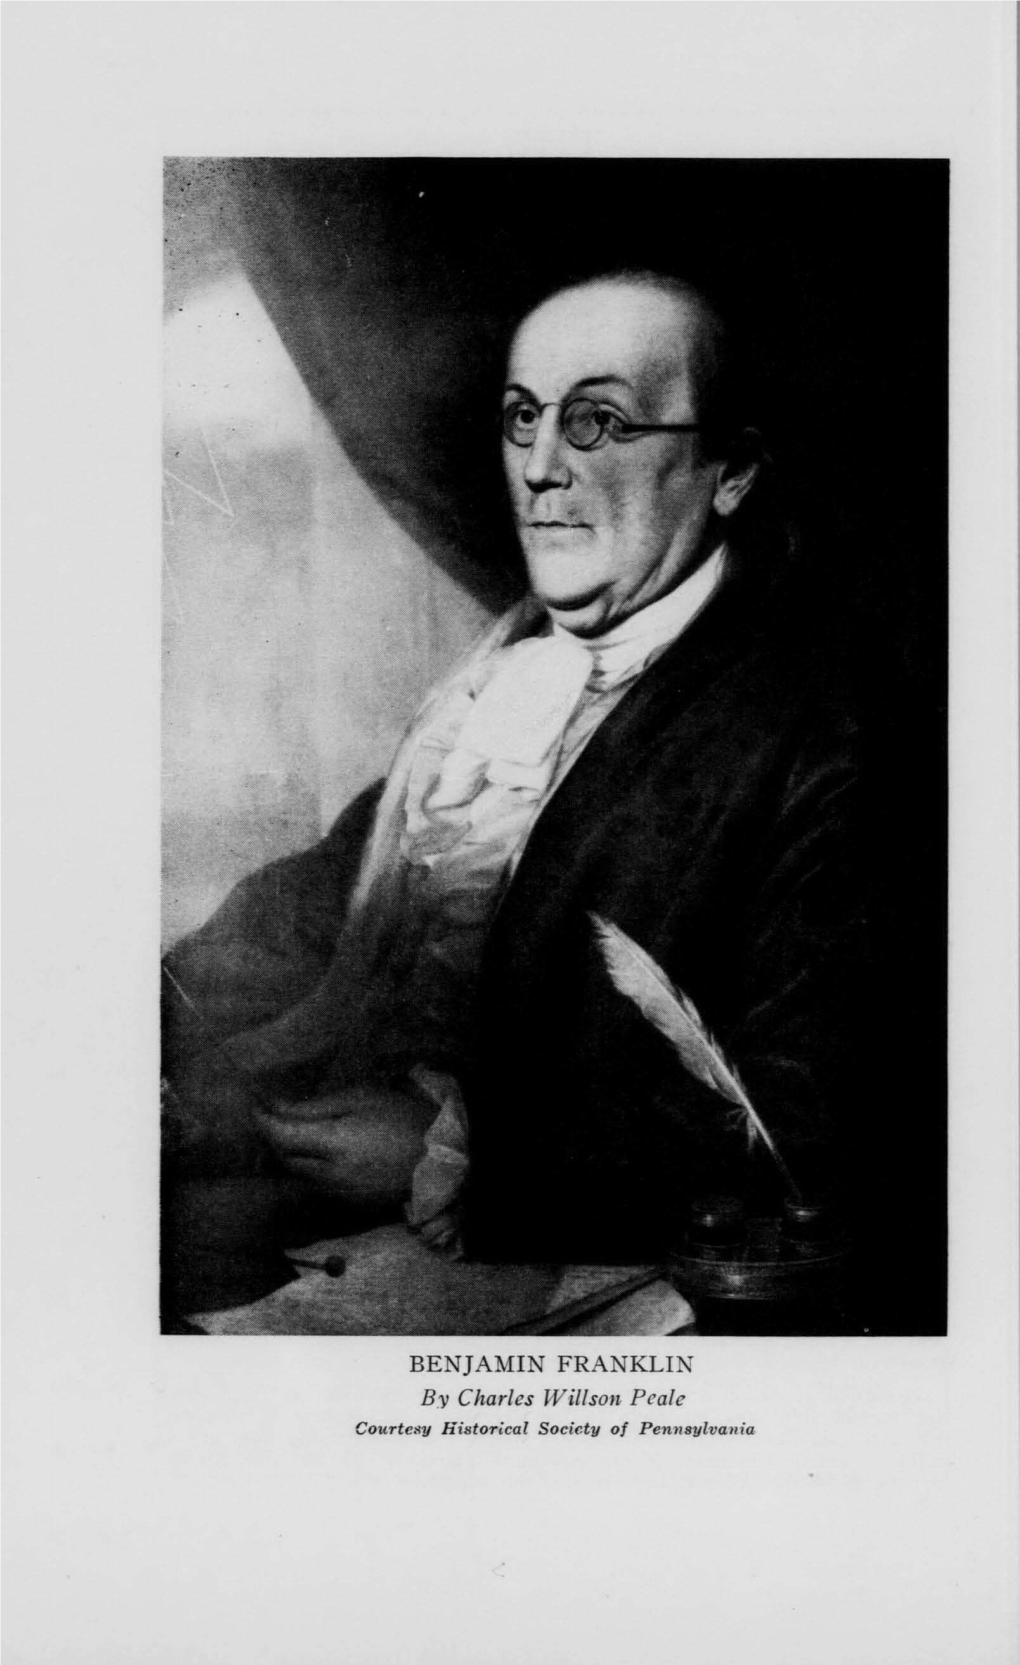 BENJAMIN FRANKLIN by Charles Willson Peale Courtesy Historical Sciety of Pennsylvania PENNSYLVANIA HISTORY